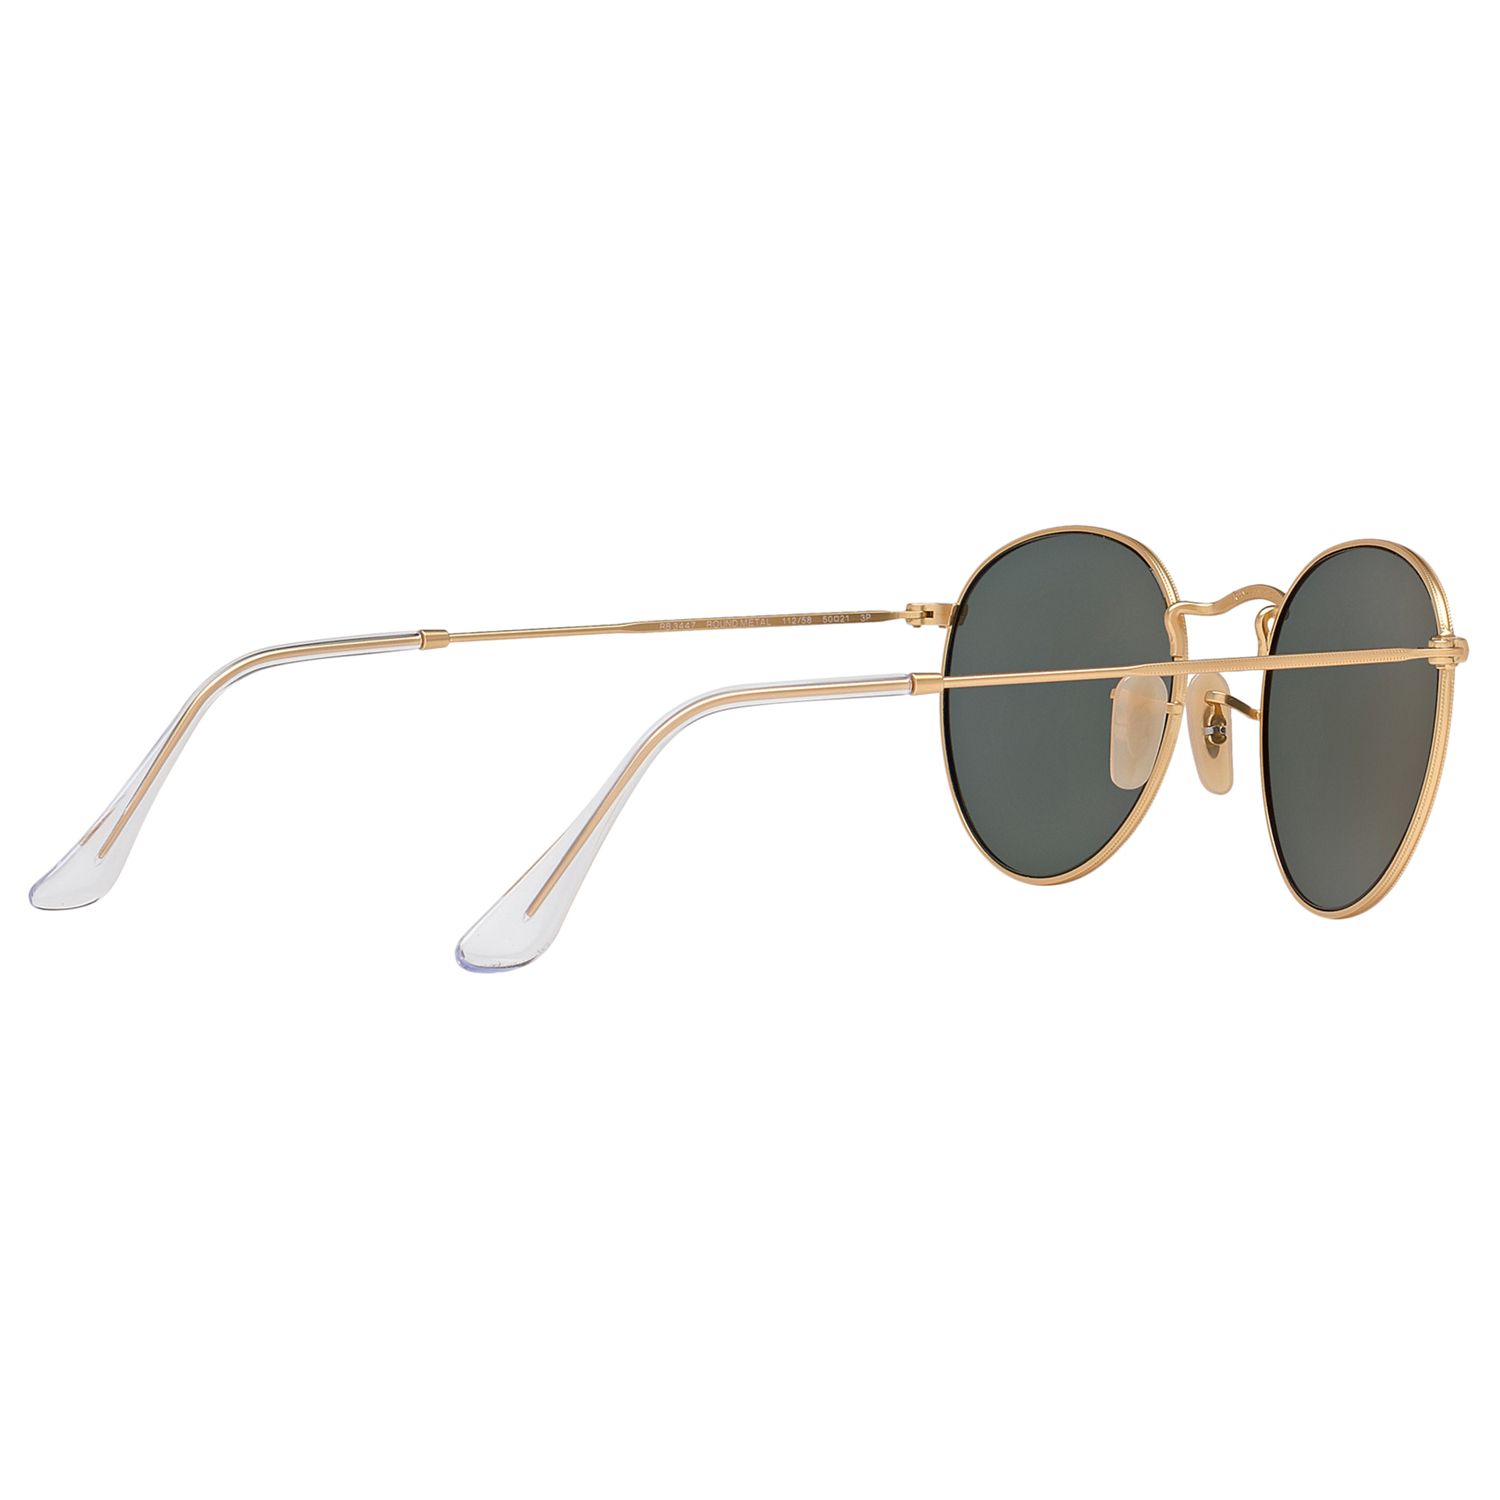 Ray-Ban RB3447 Polarised Round Sunglasses, Gold/Dark Green